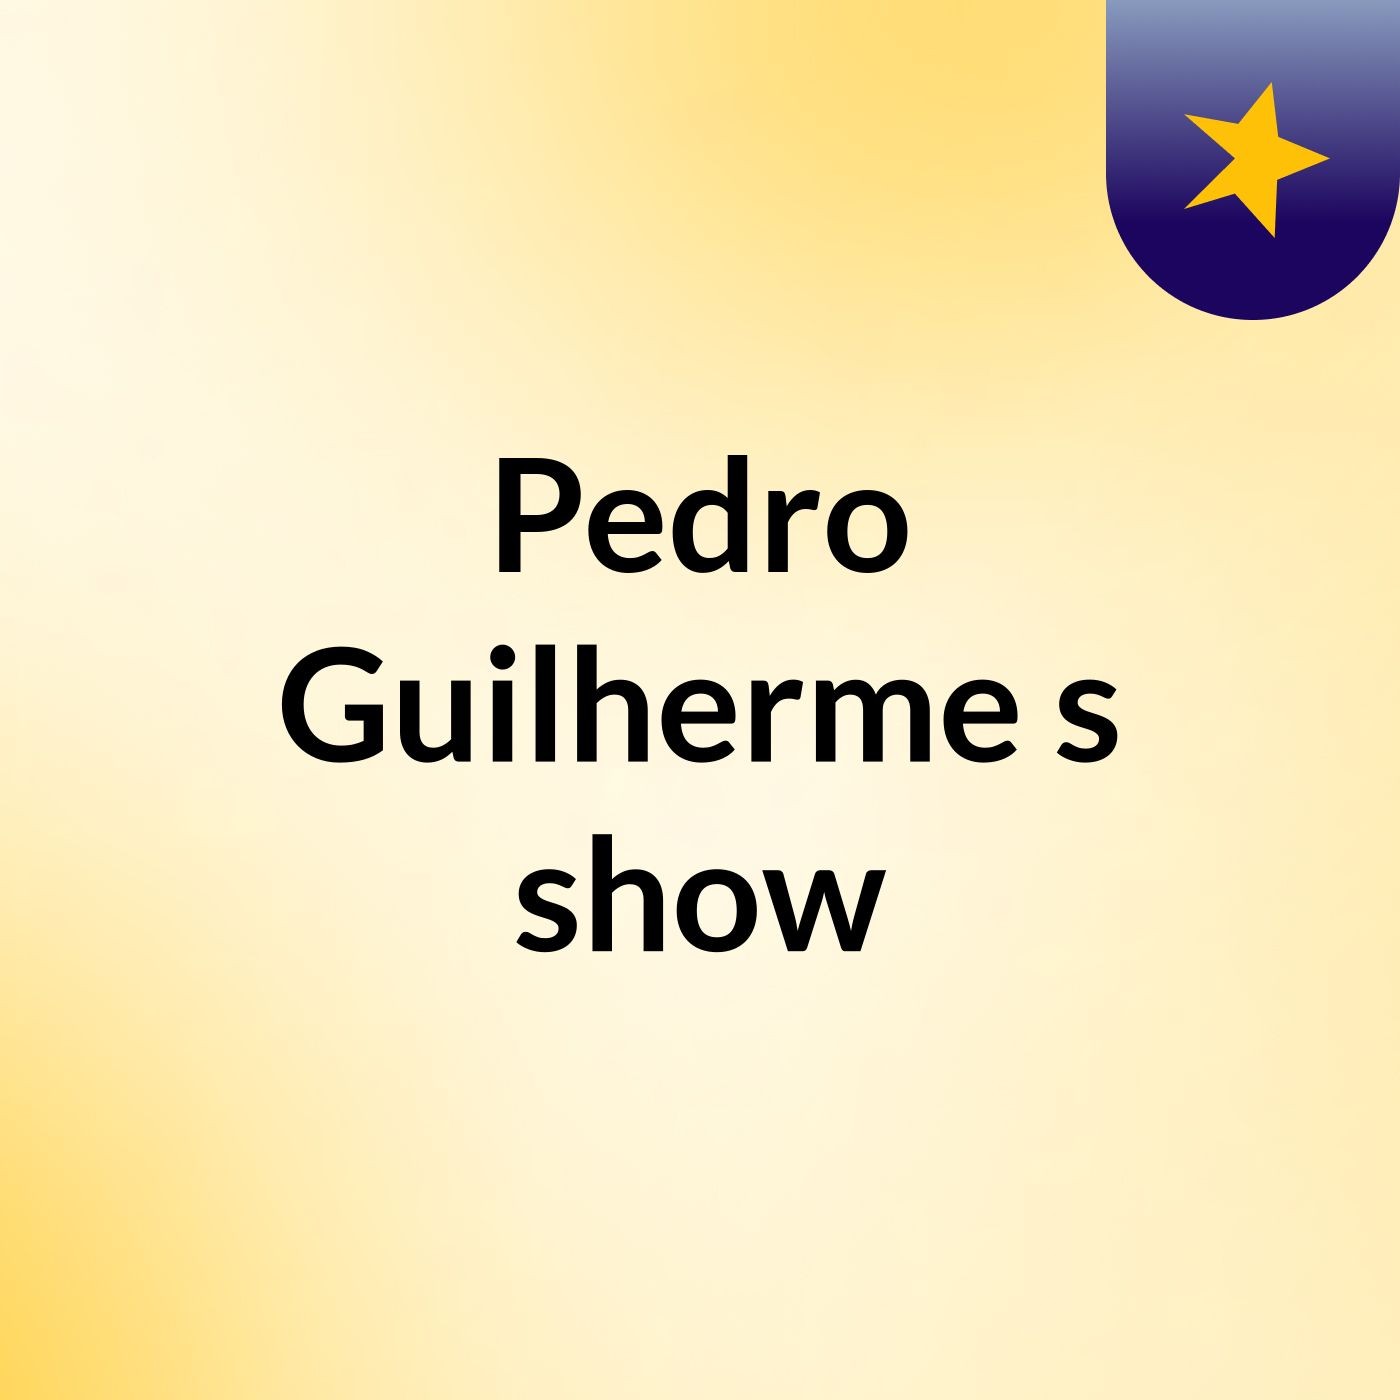 Pedro Guilherme's show